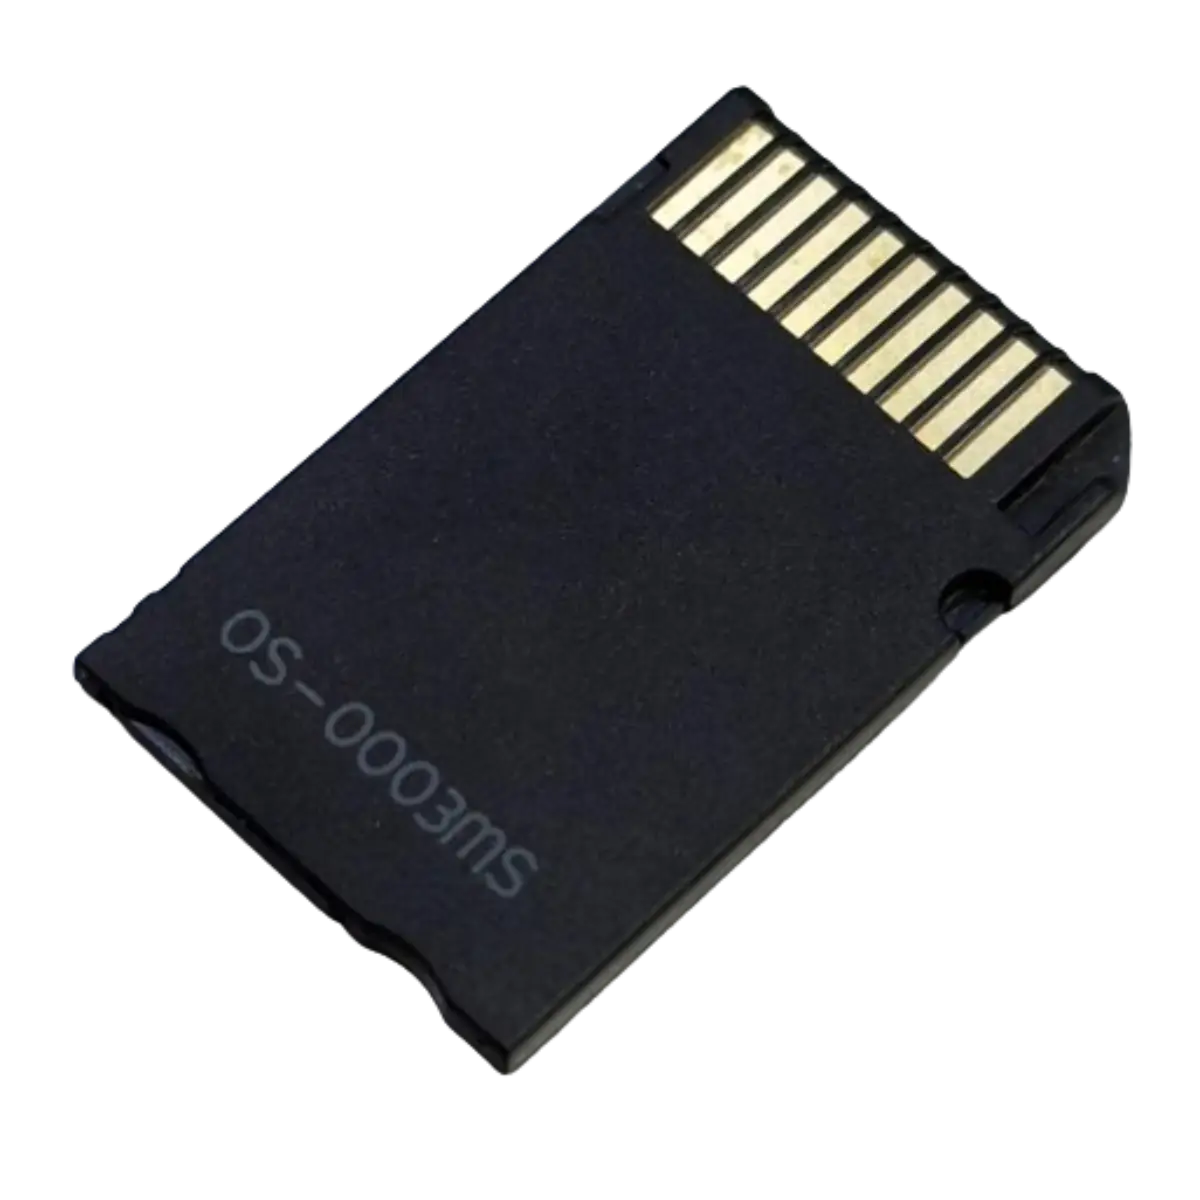 Carte mémoire Memory Stick Pro Duo 32Gb